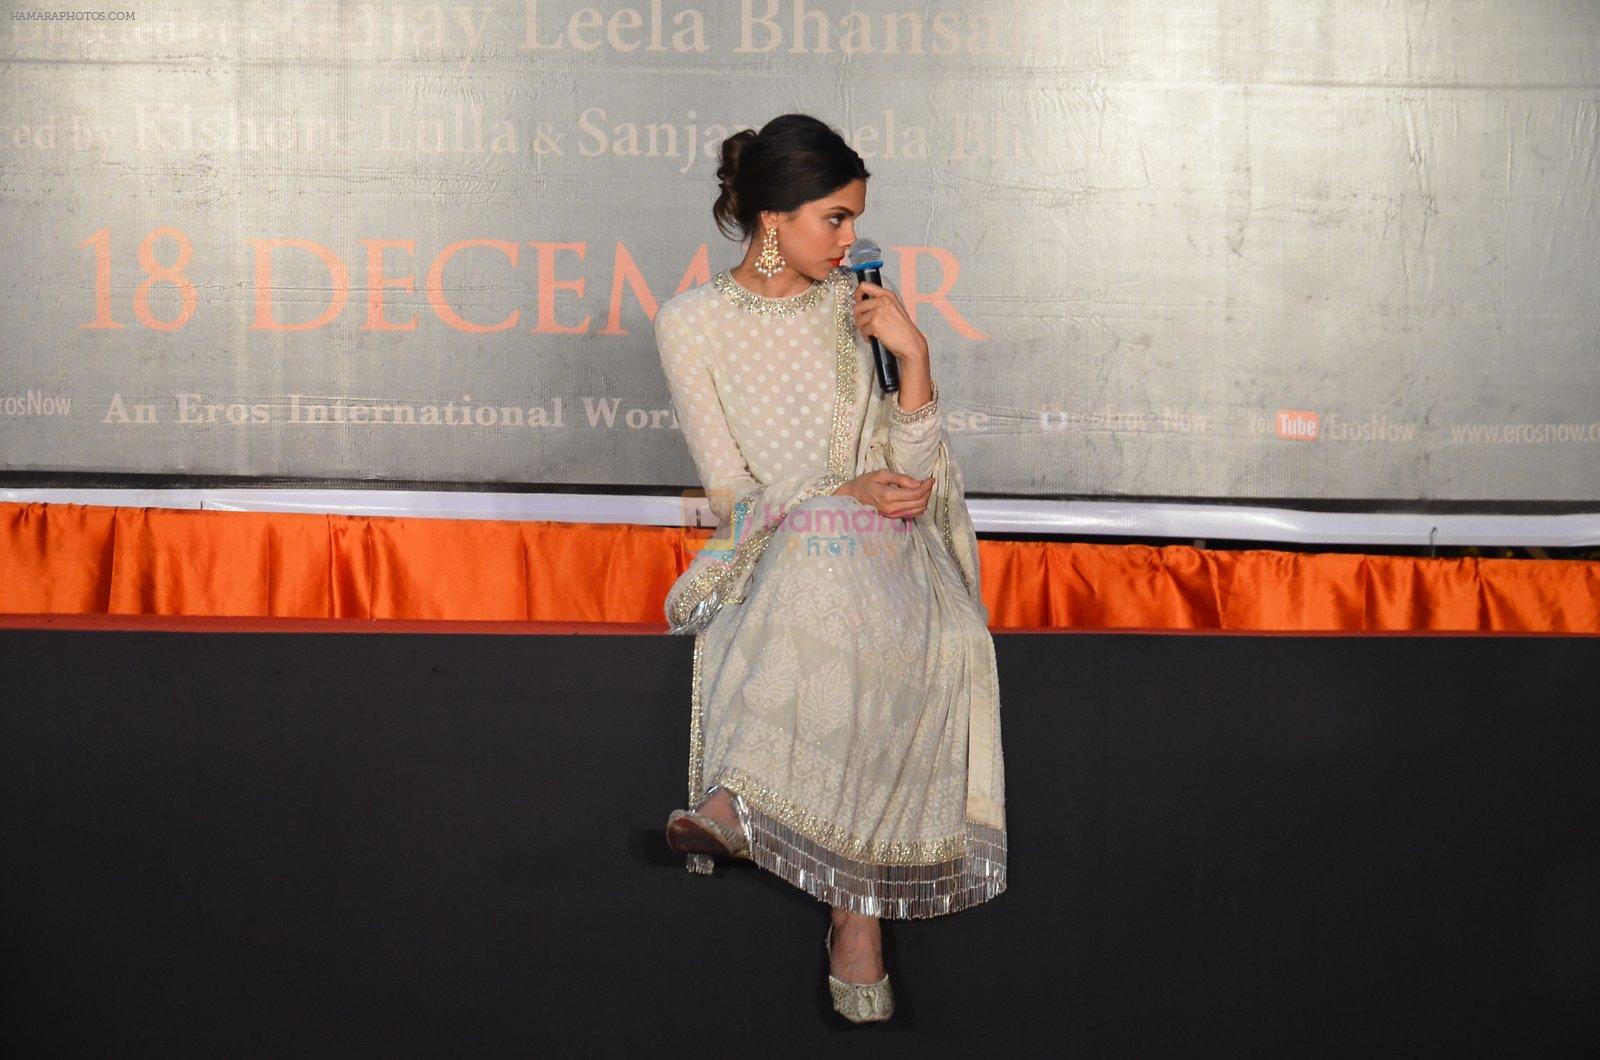 Deepika Padukone at Bajirao Mastani promotions on 8th Nov 2015